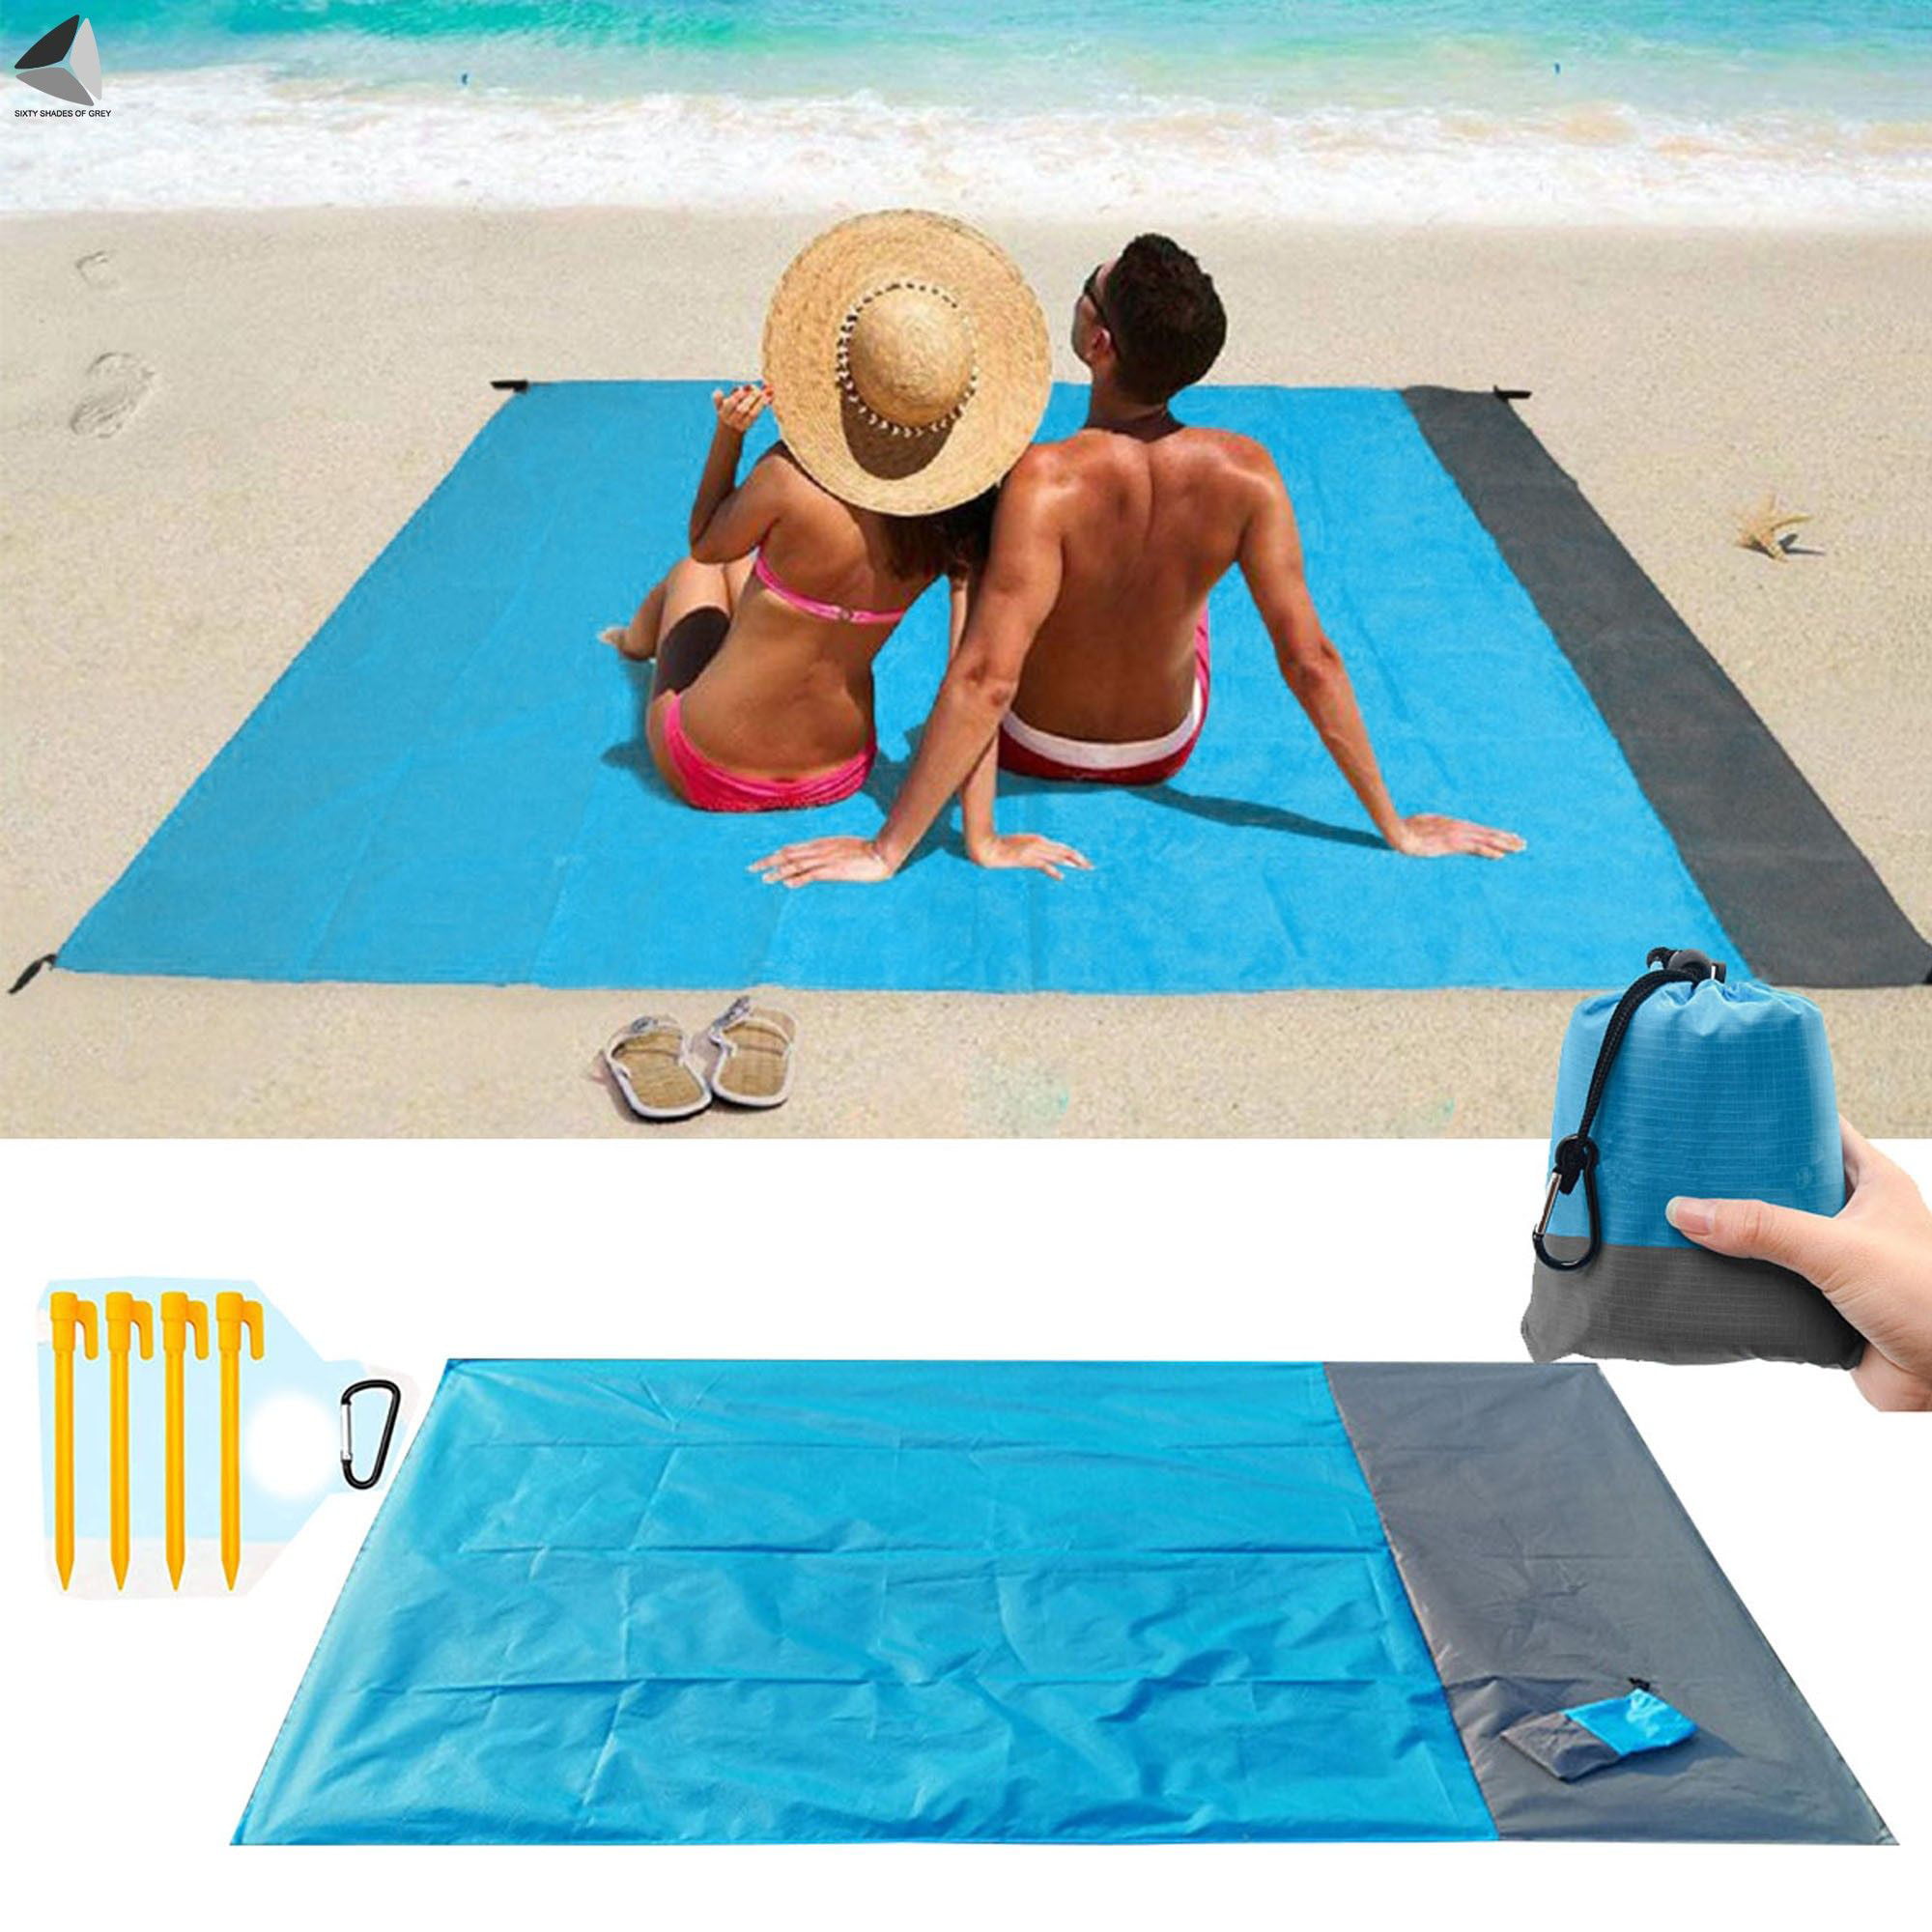 Waterproof Outdoor Garden BBQ Picnic Blanket Sand Beach Mat Camping Pad Portable